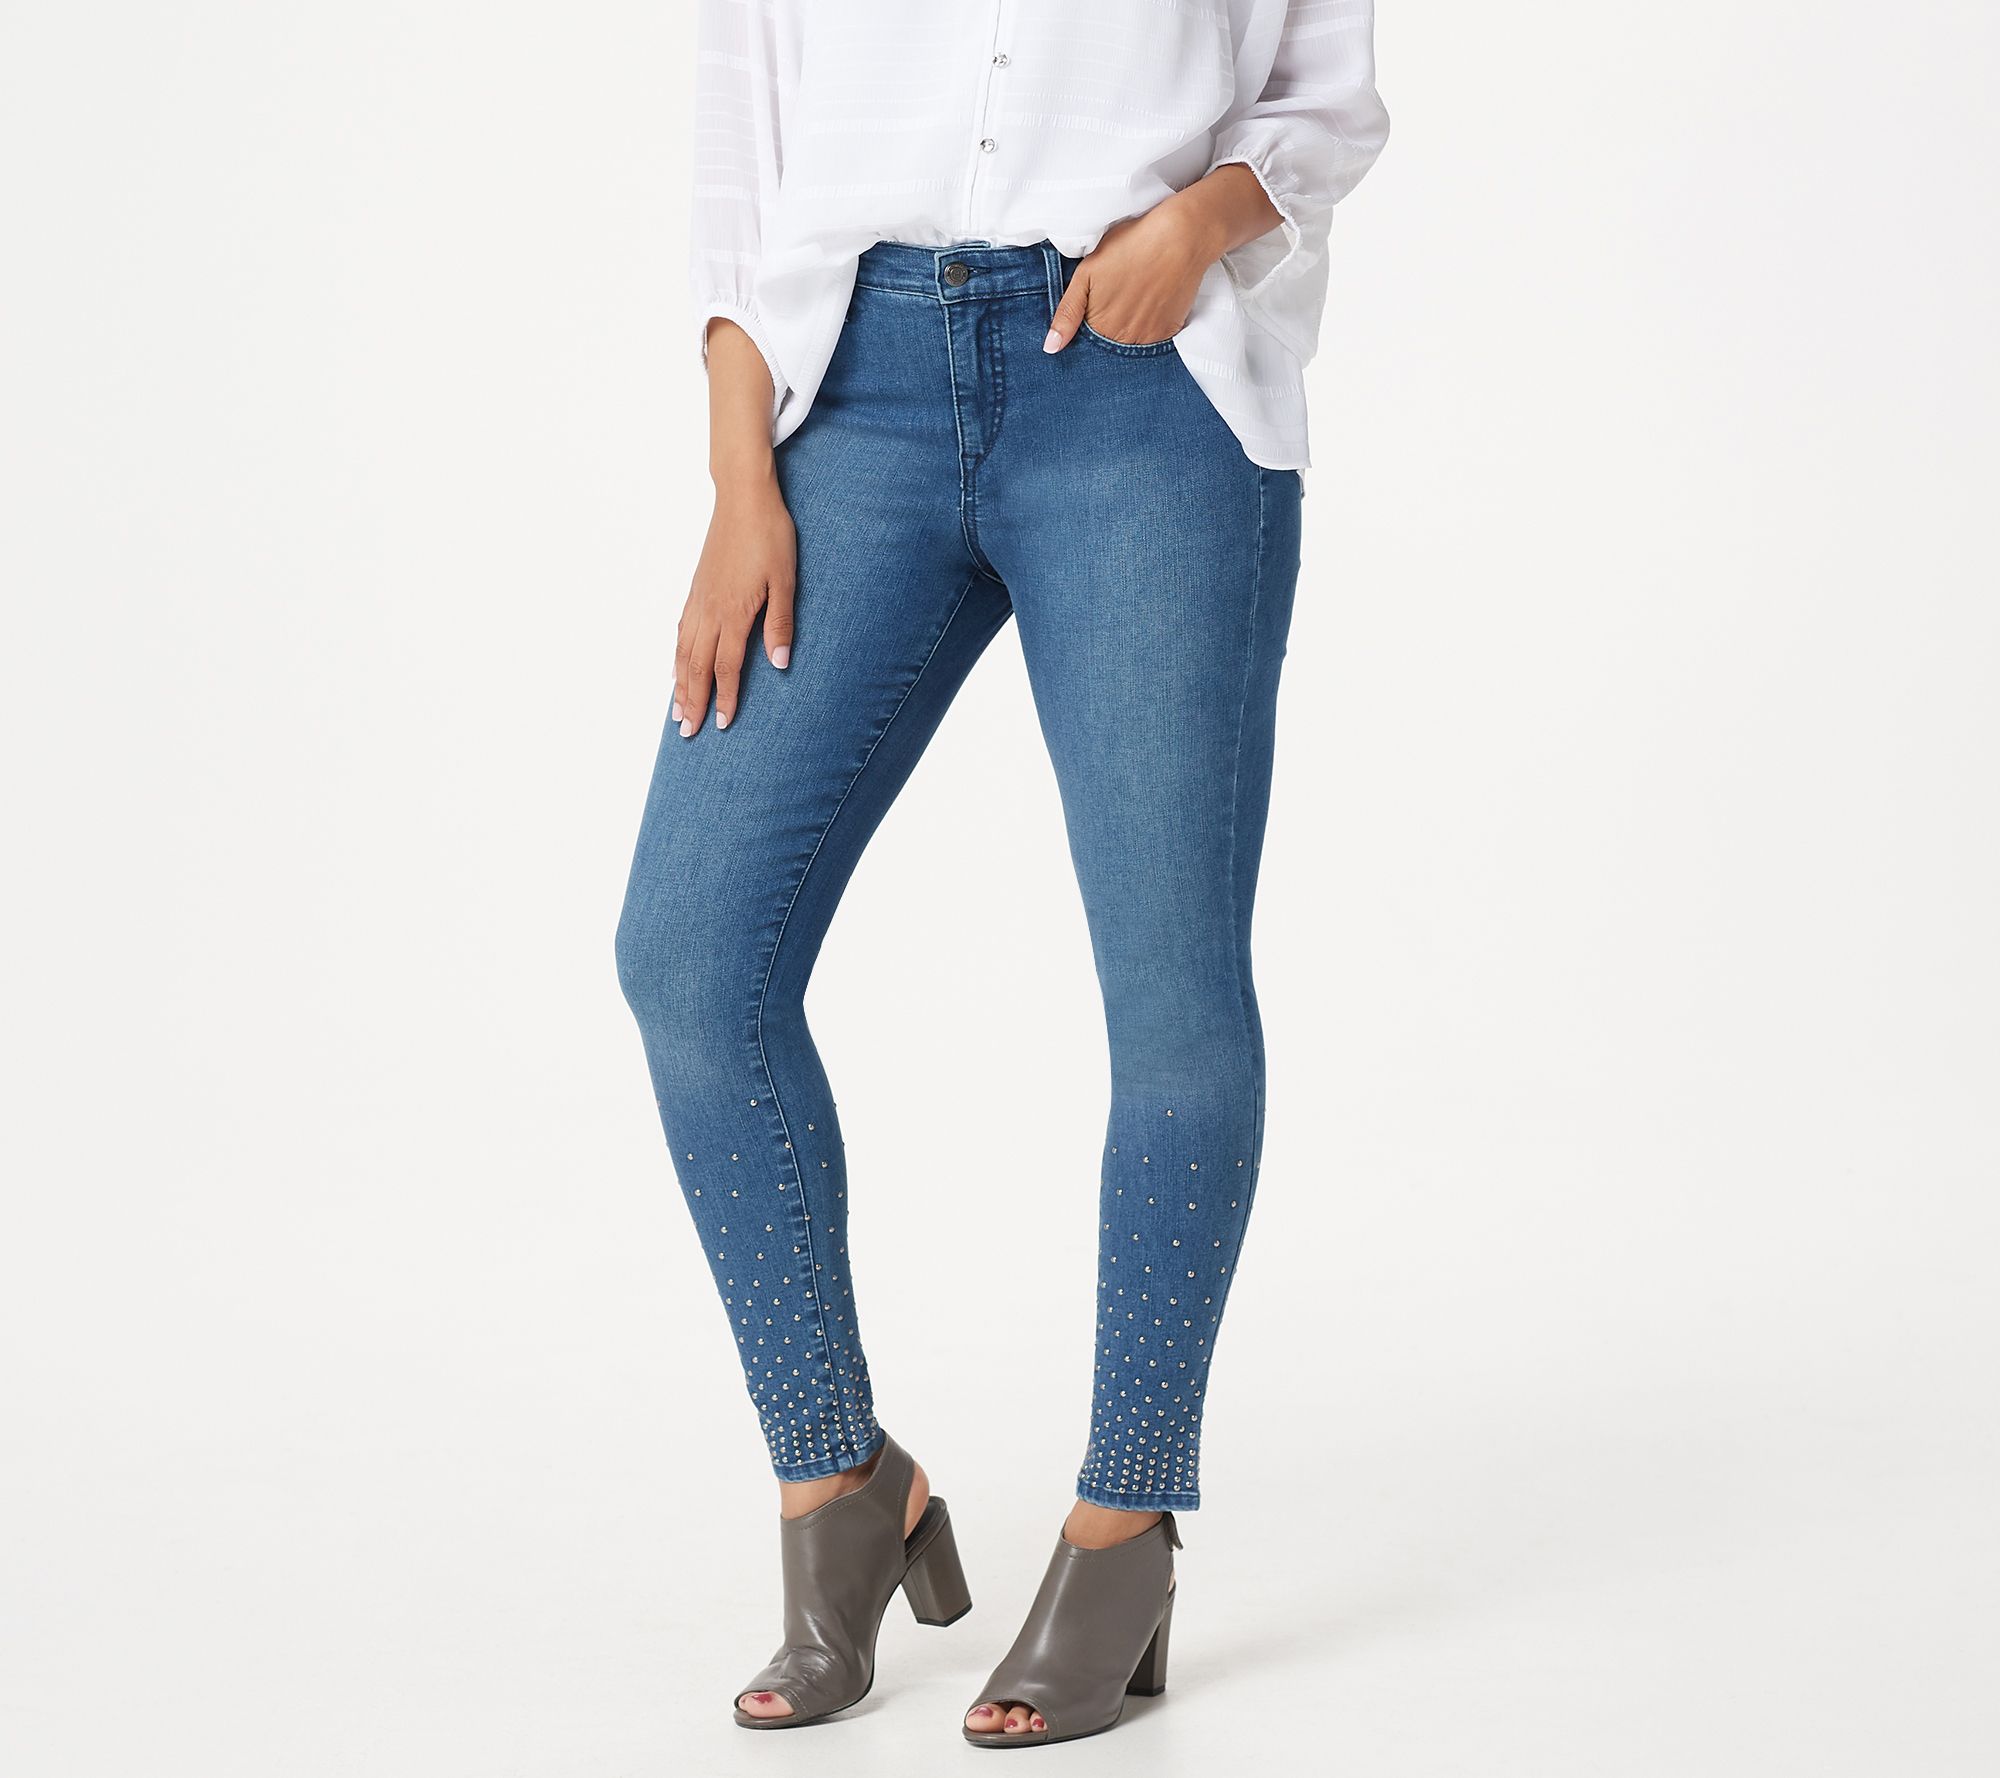 H by Halston Premier Denim  Ankle Length Skinny Jeans Light Indigo Size Petite16 